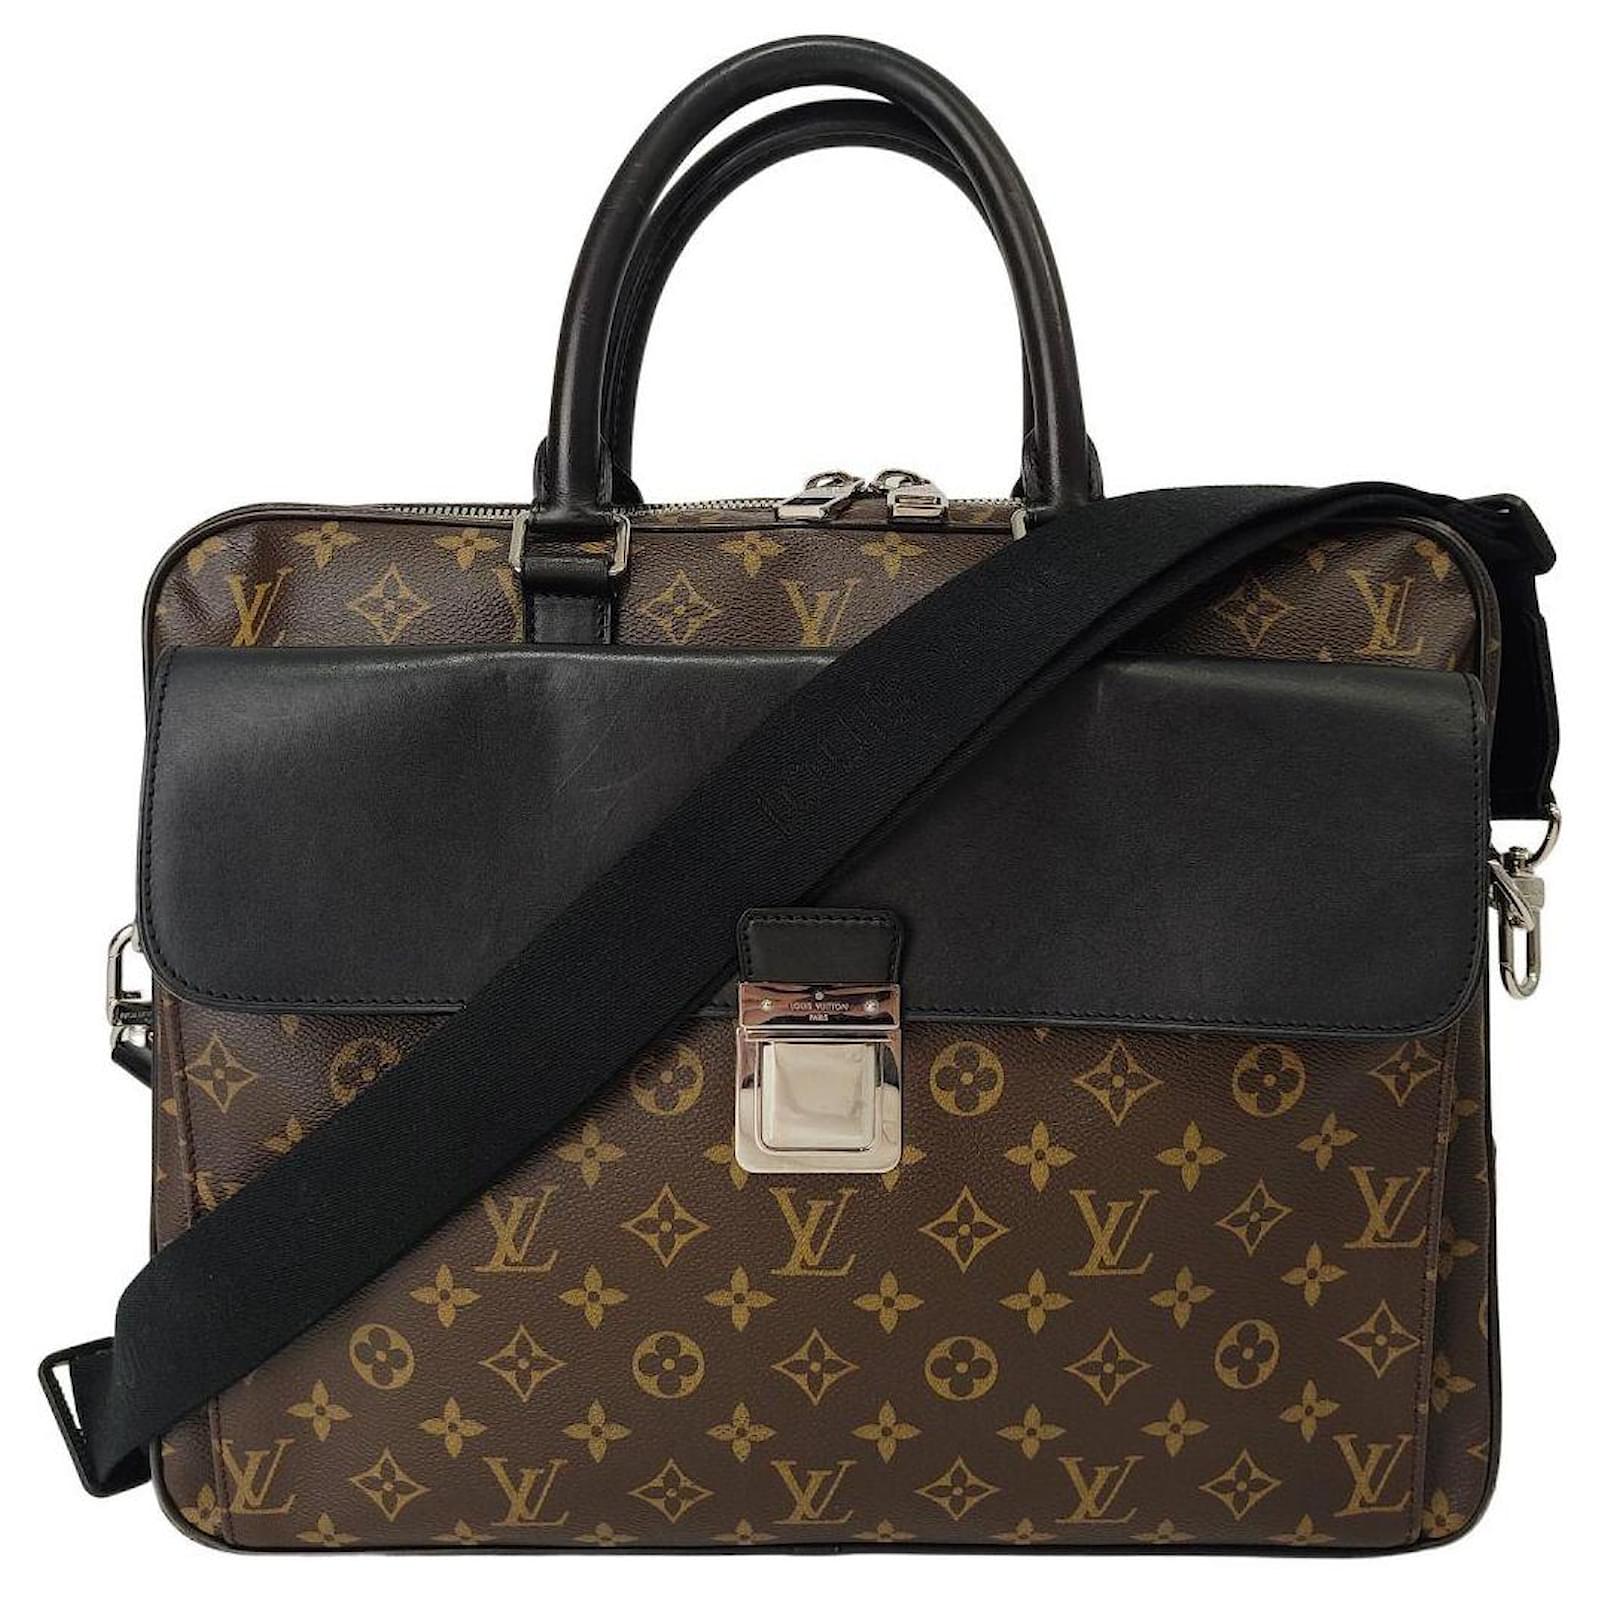 Black Louis Vuitton Soft Leather Bag, Brown Soft Interior, Gold Hardware